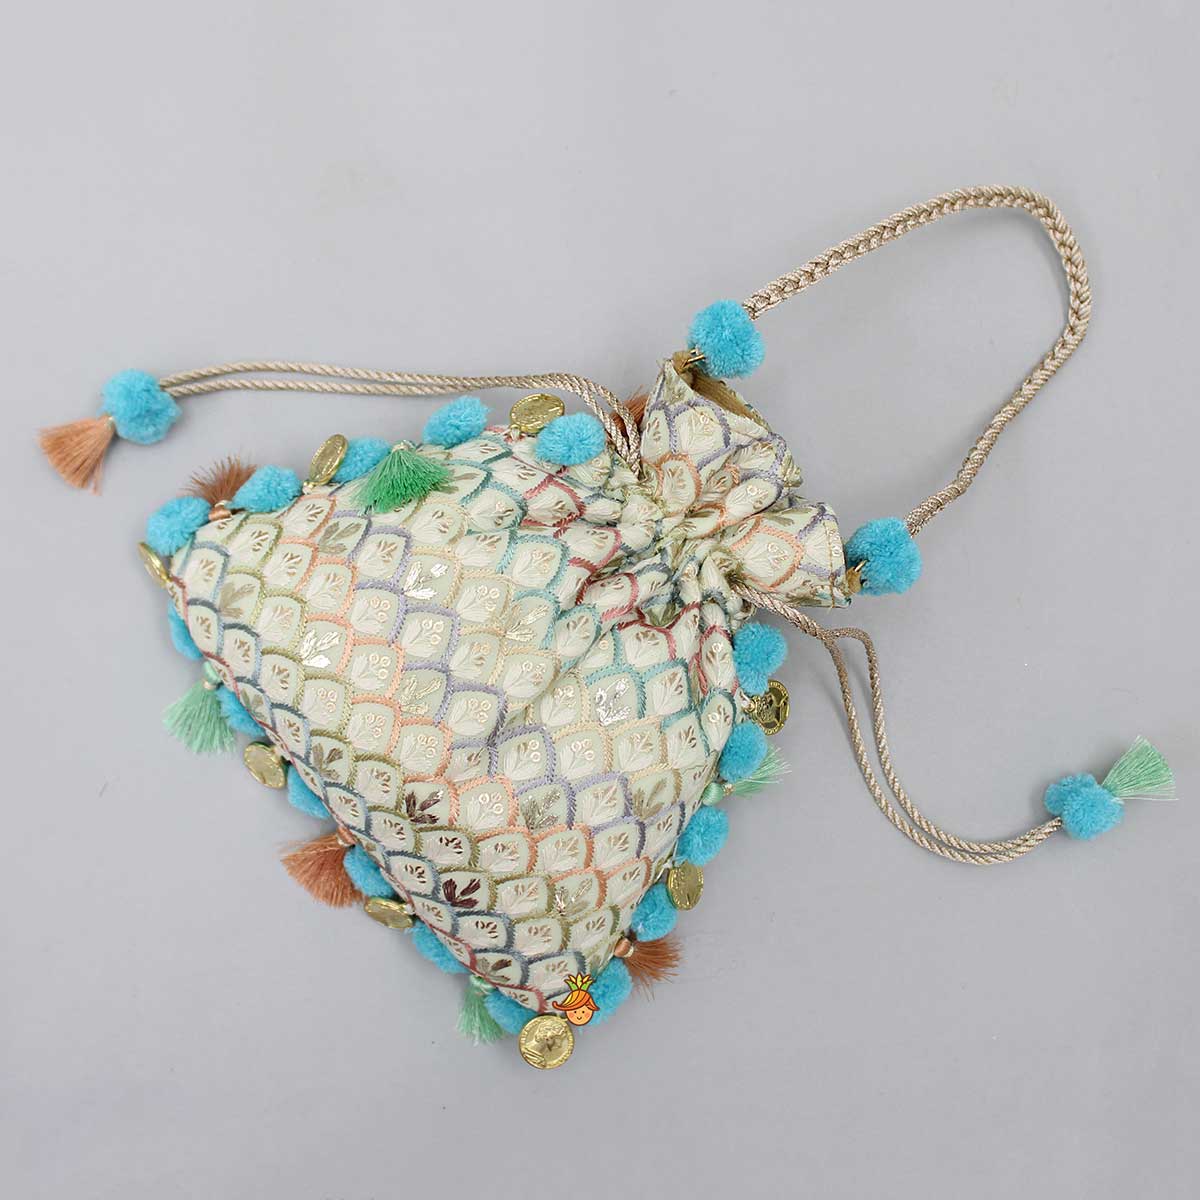 Exquisite Embroidered Potli Bag